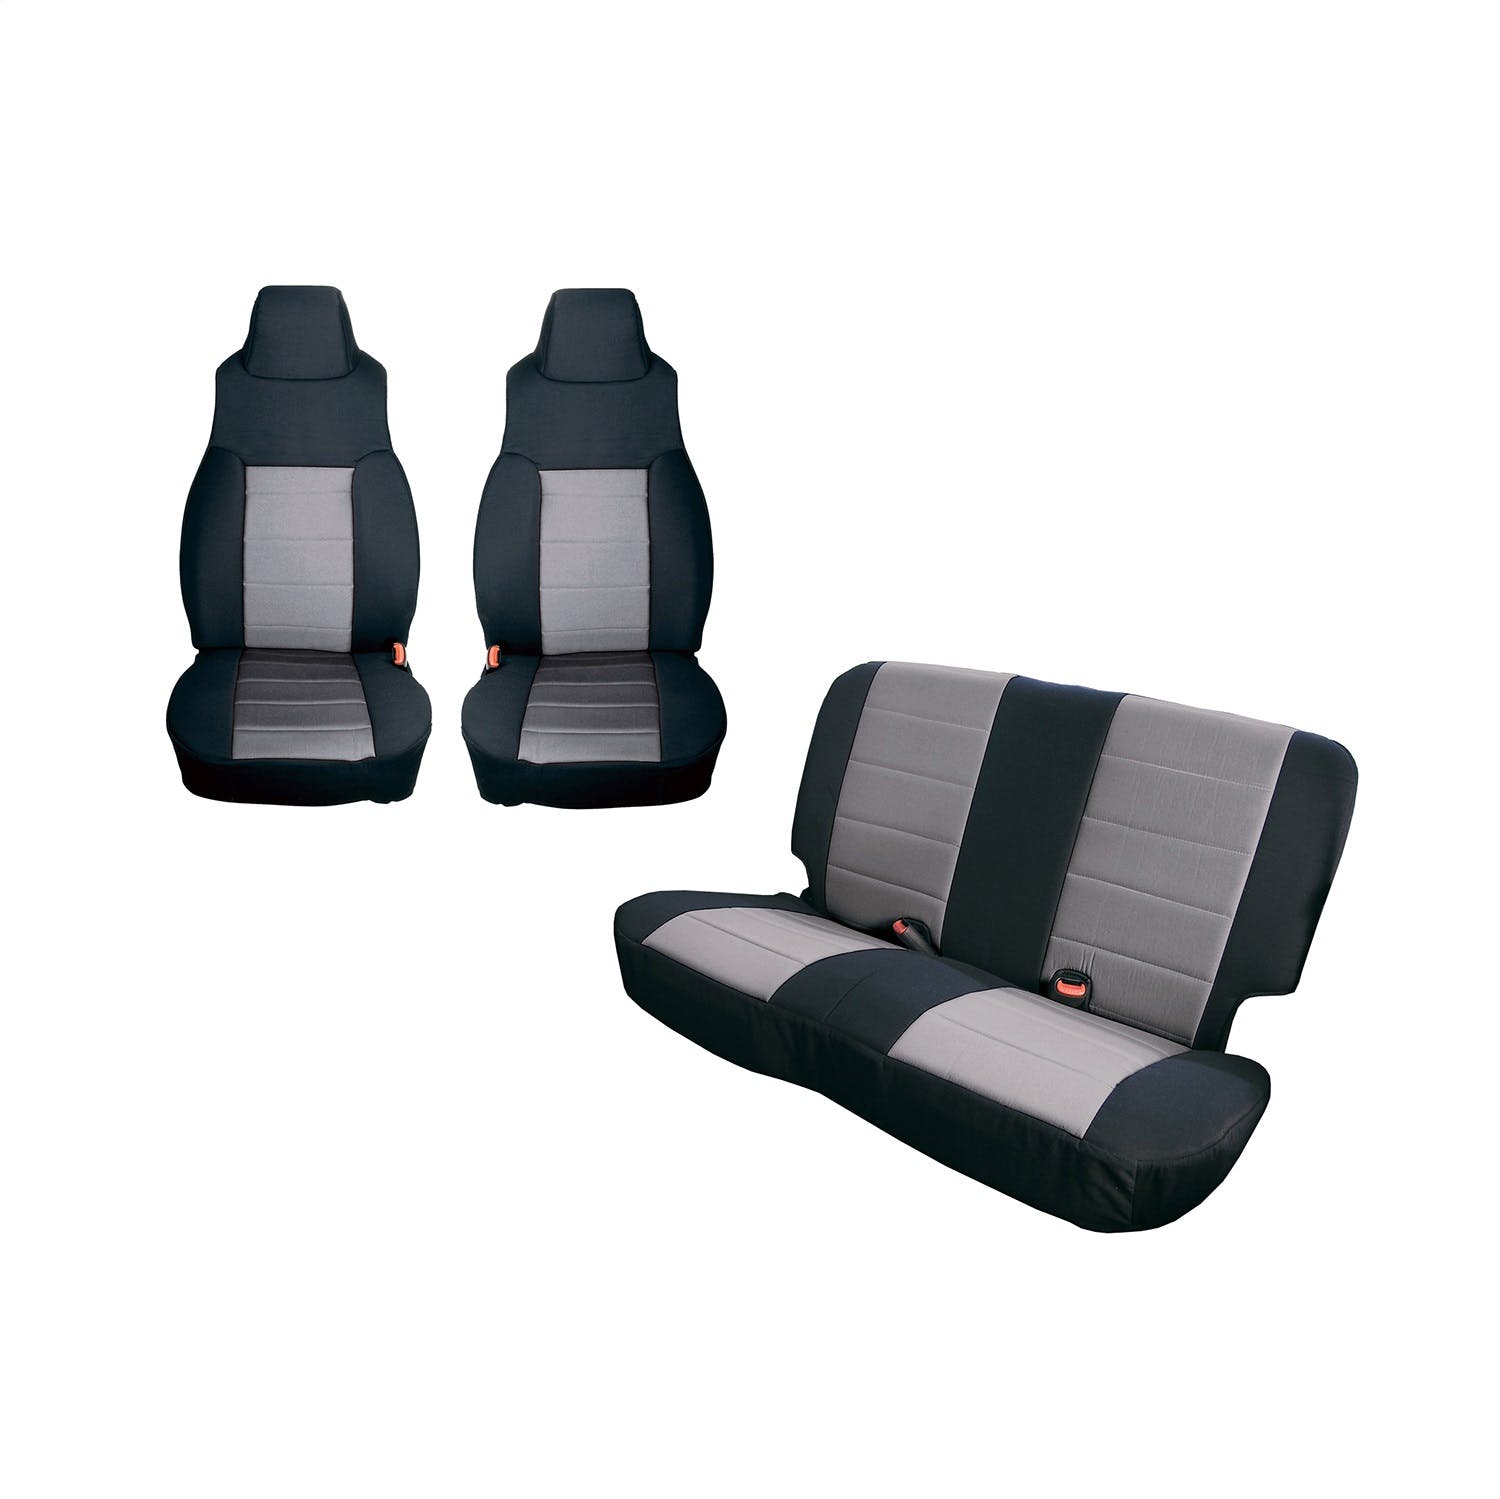 Rugged Ridge 13293.09 Seat Cover Kit, Black/Gray